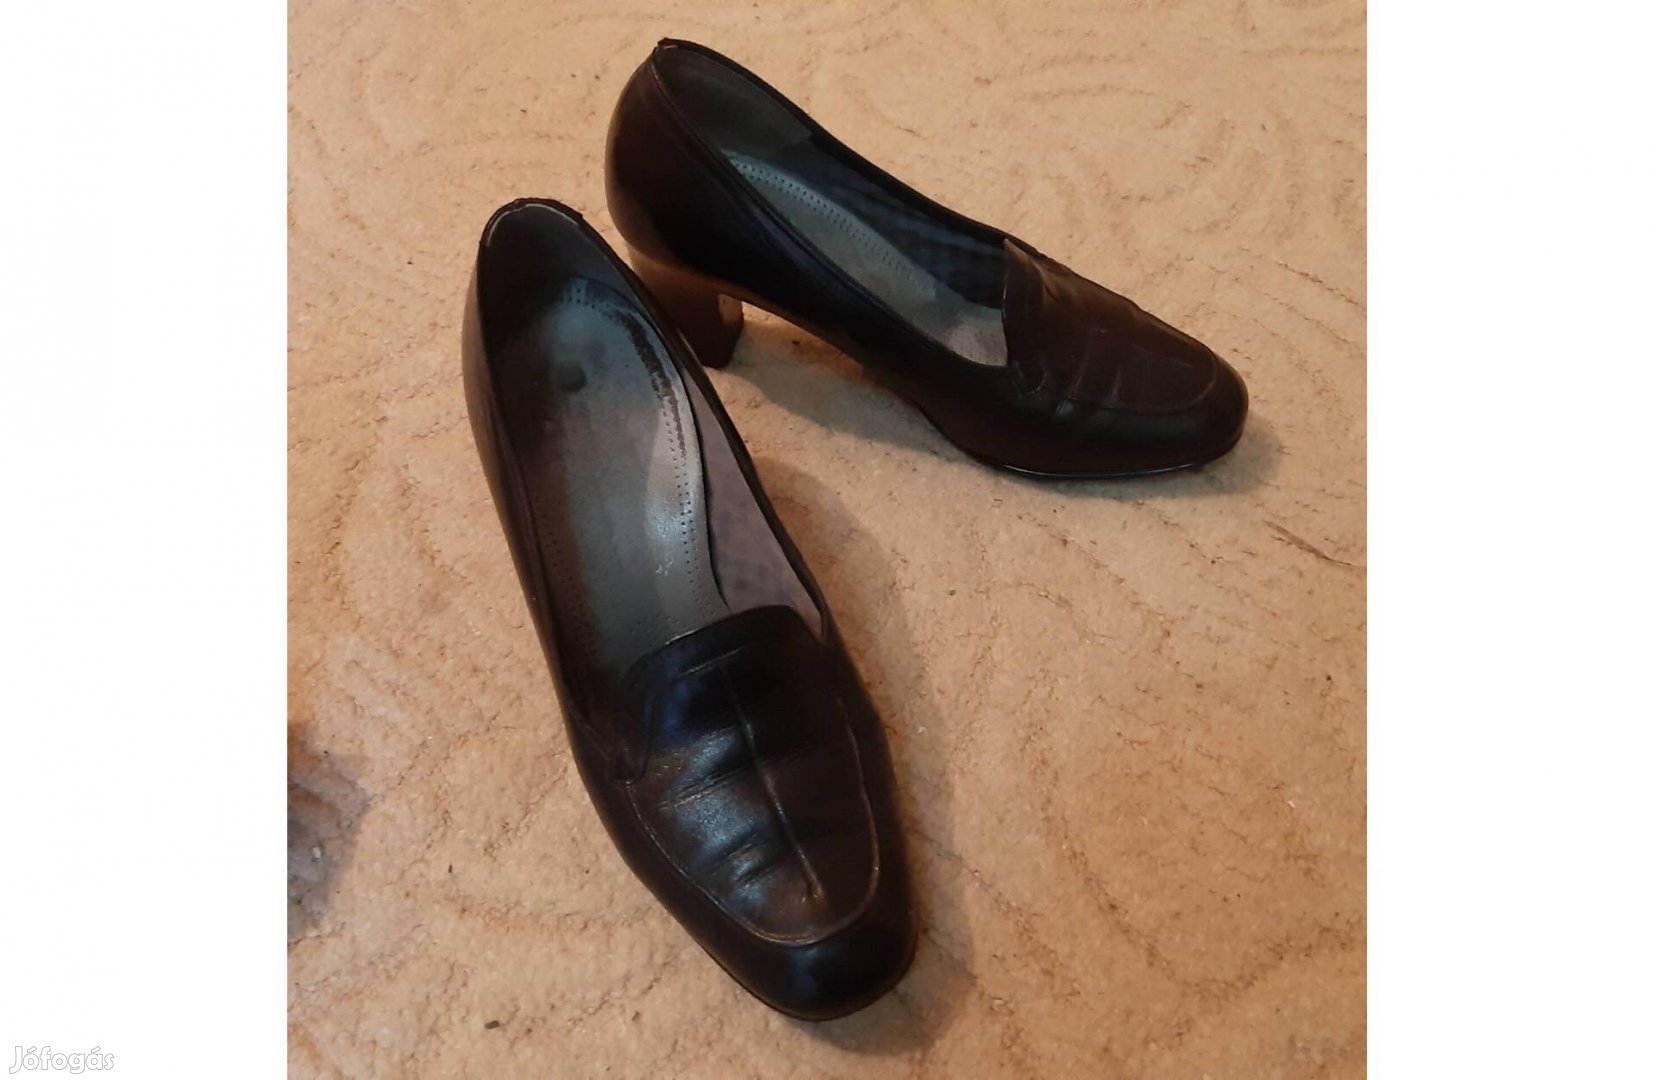 Fekete bőr cipő 38 méret, elegáns női cipő